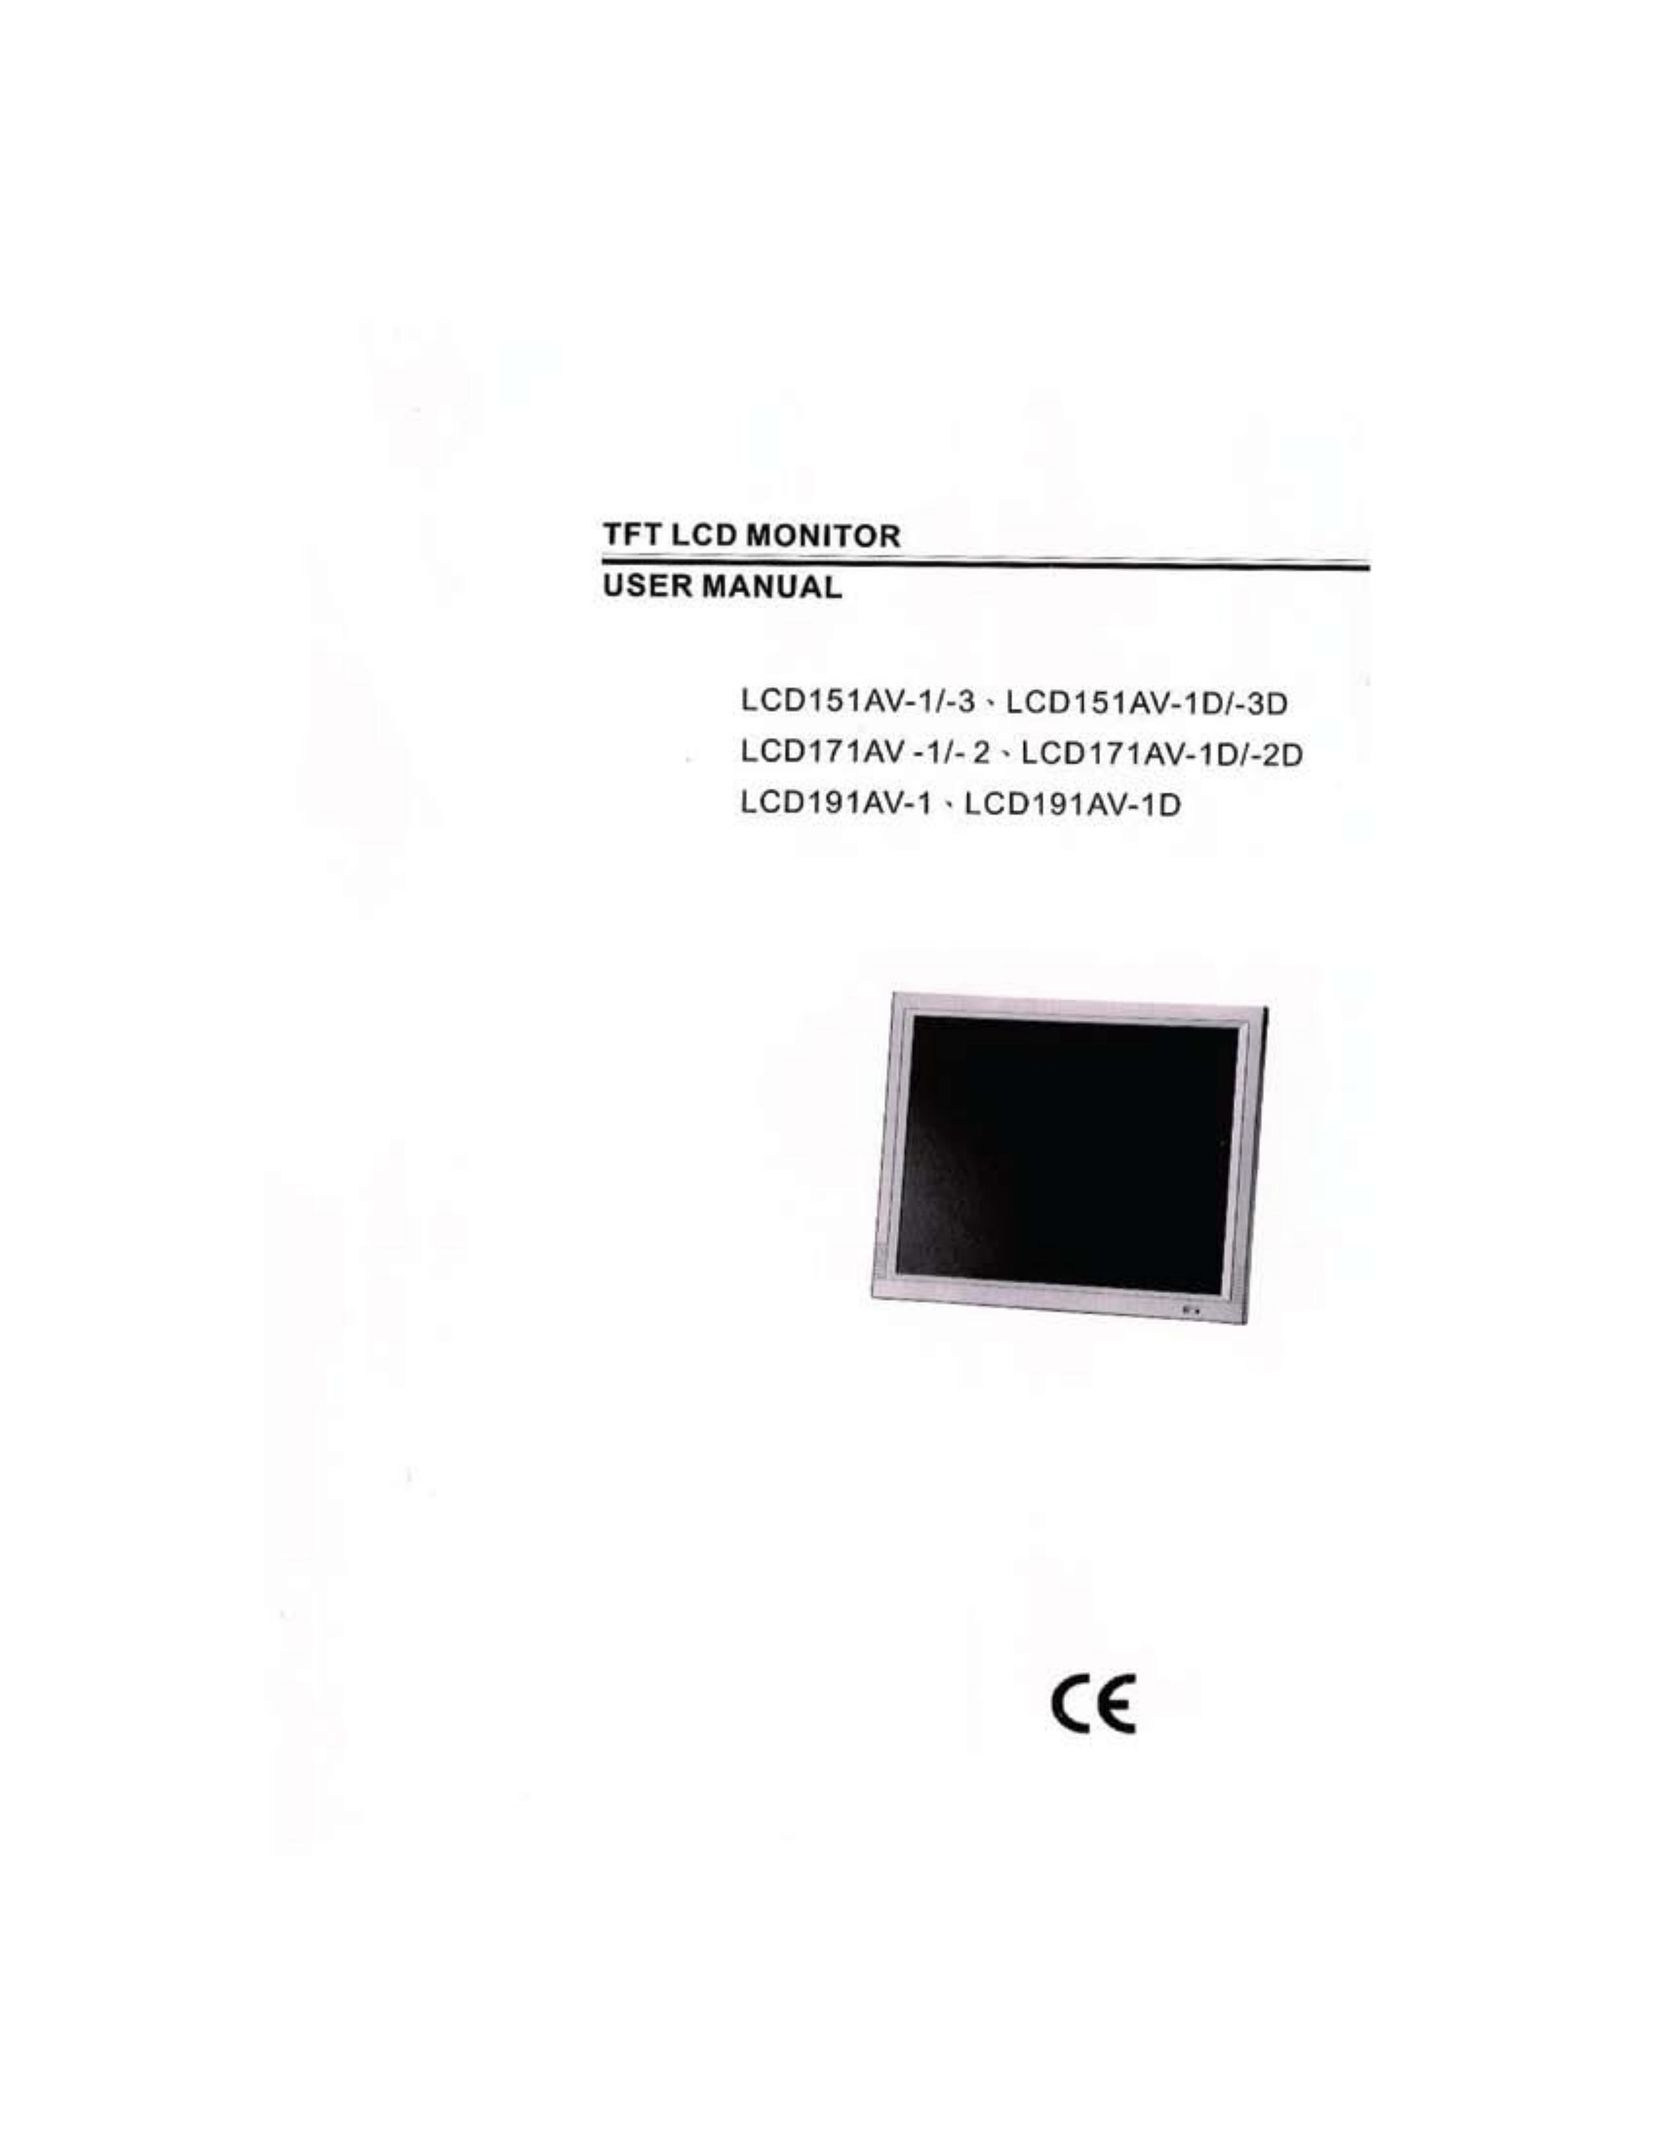 AVE LCD171AV-1/-2 Computer Monitor User Manual